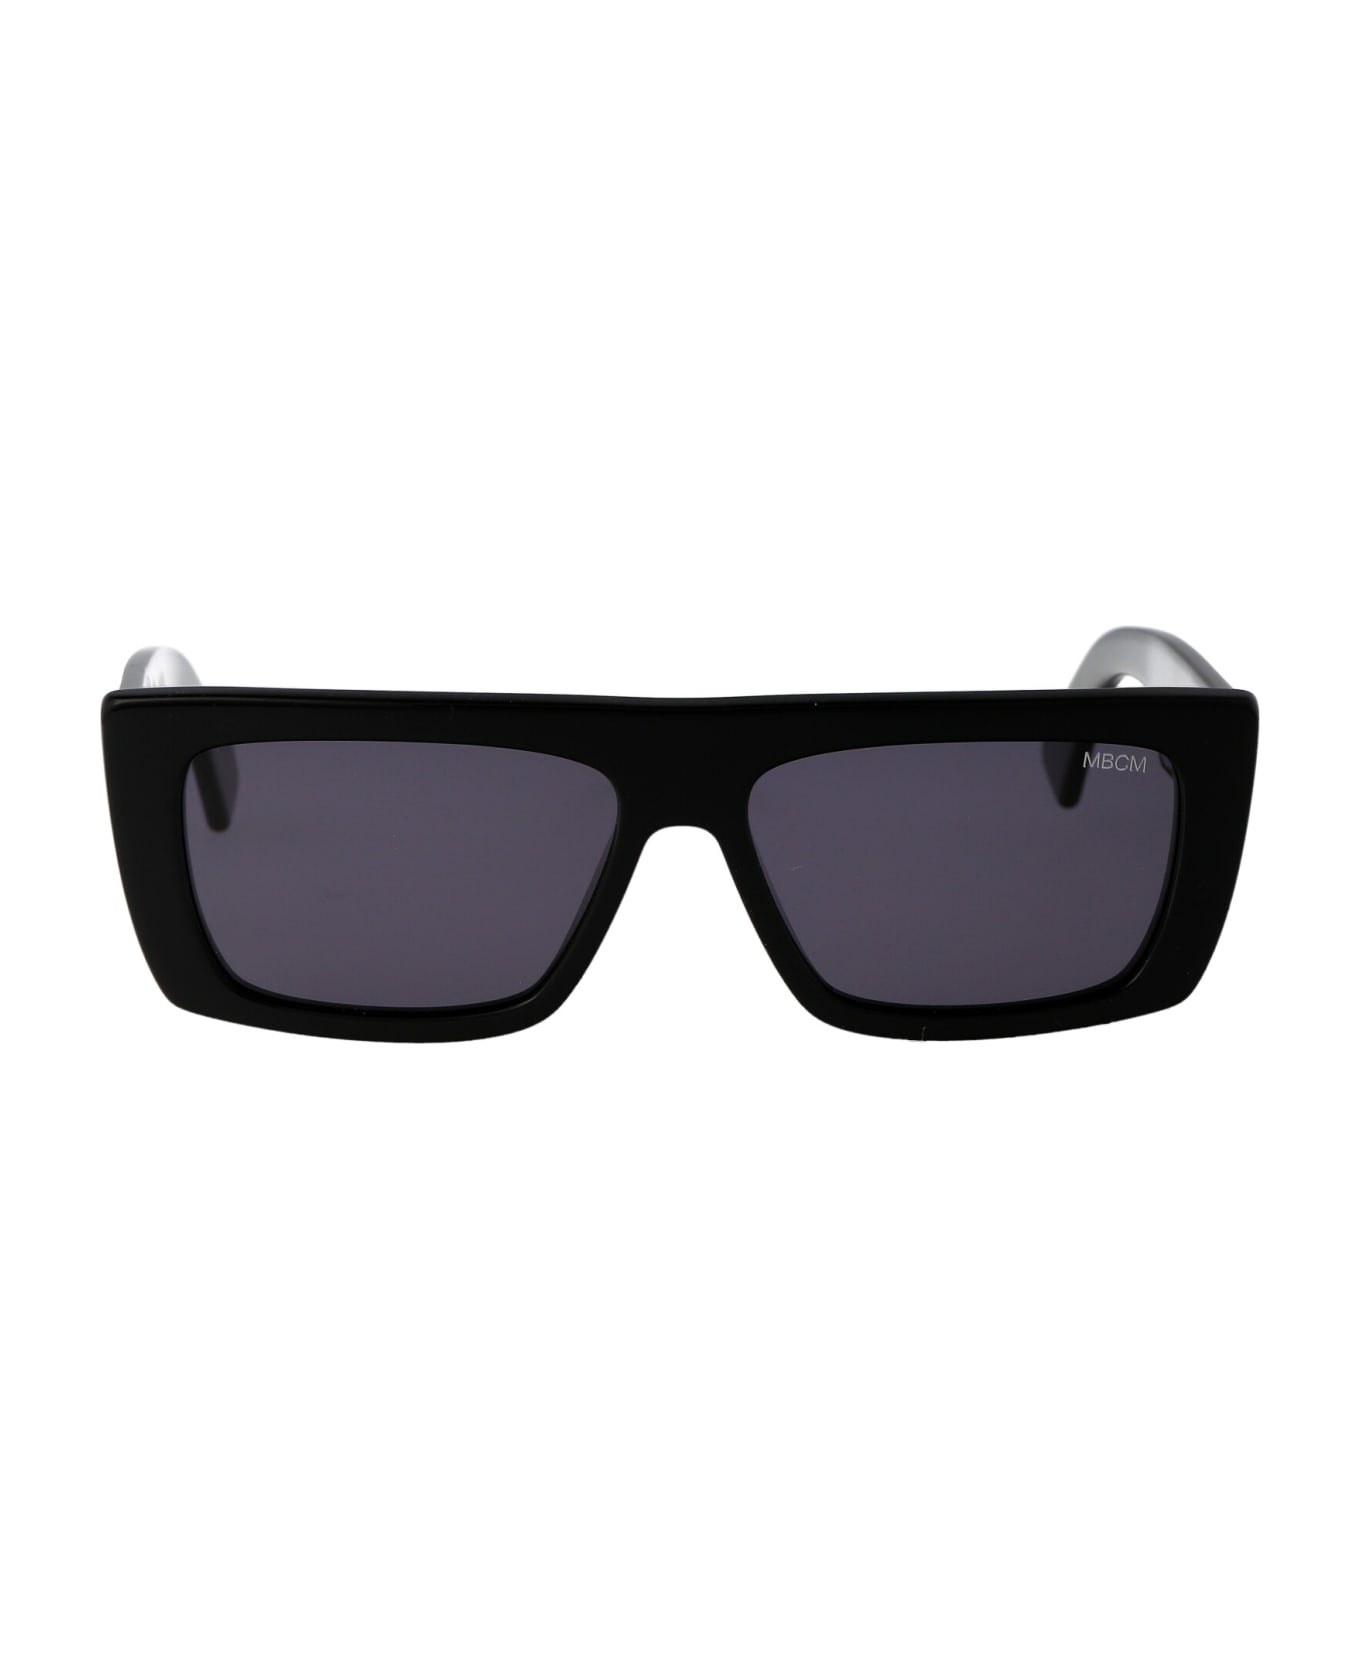 Marcelo Burlon Lebu Sunglasses - 1007 BLACK サングラス